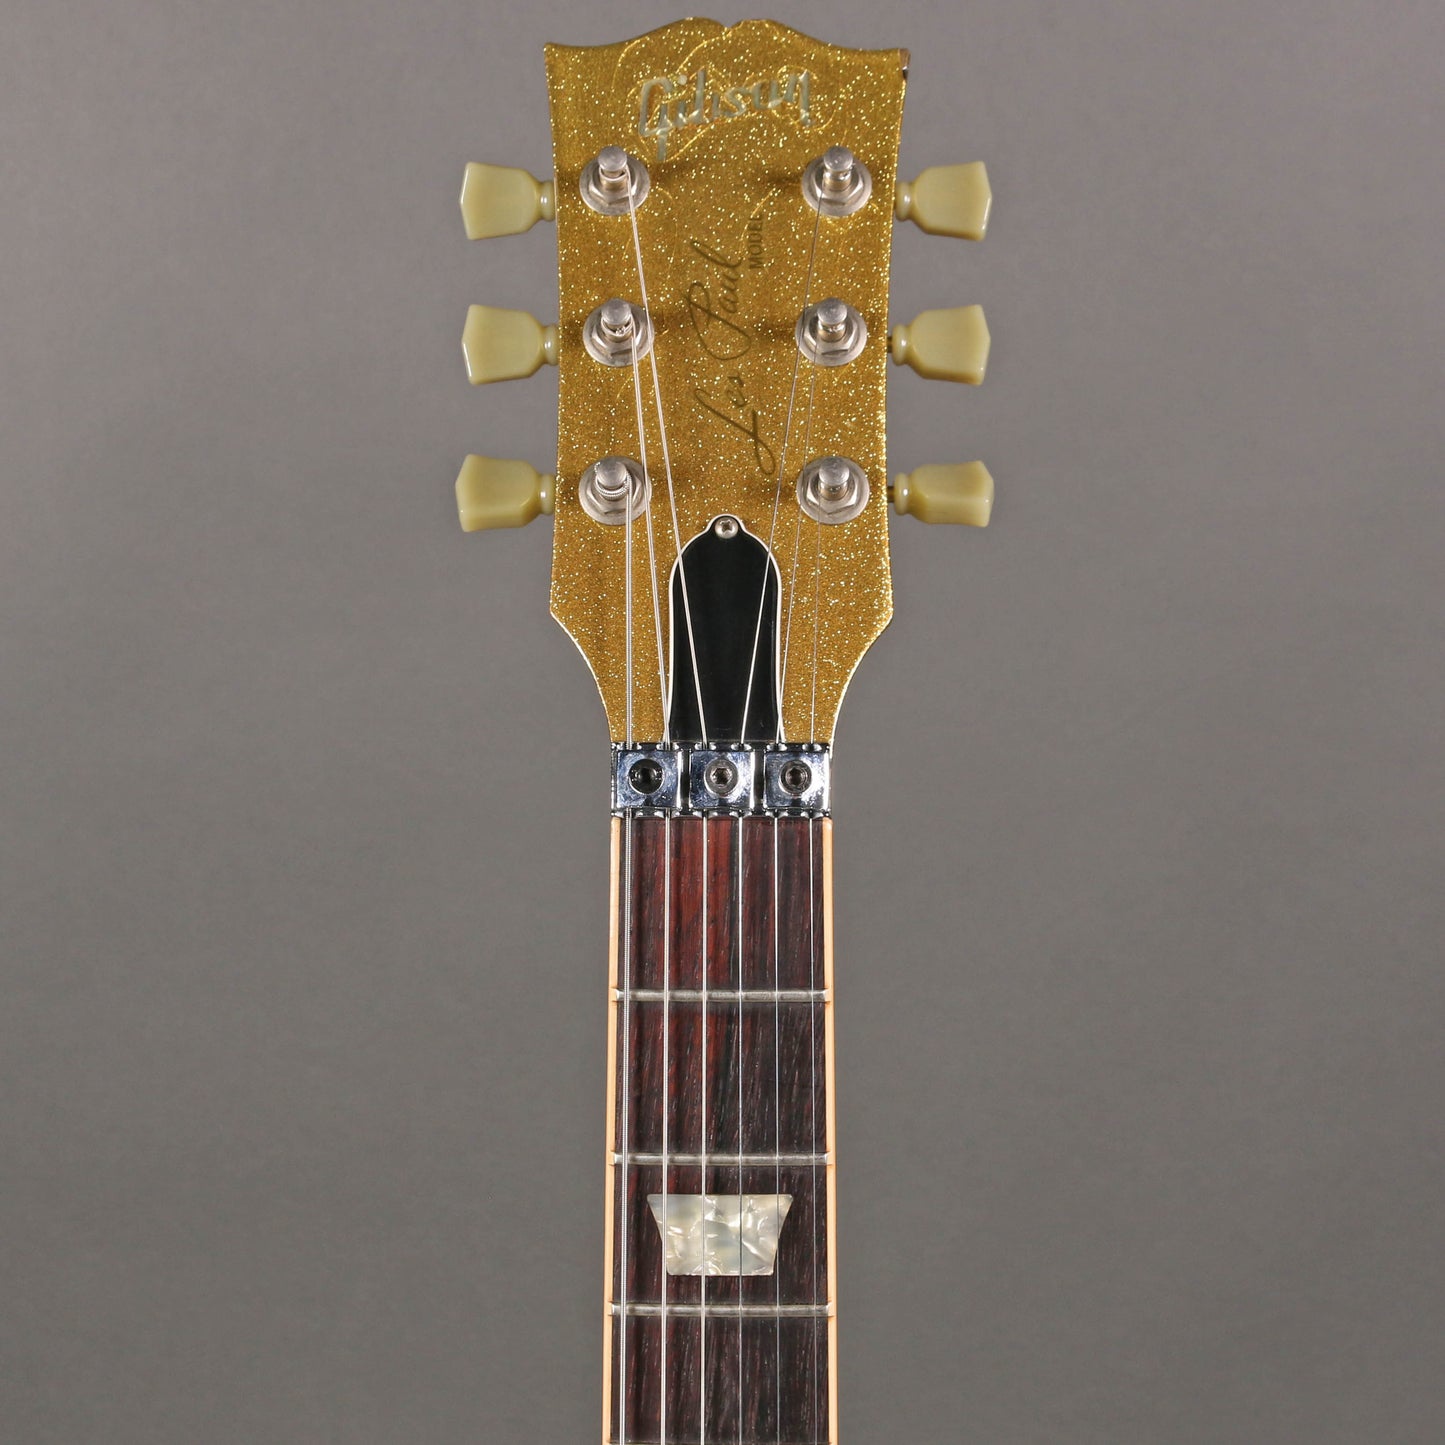 2006 Gibson Custom Shop Les Paul [*ビビ・マギル・オブ・ビヨンセ・コレクション]